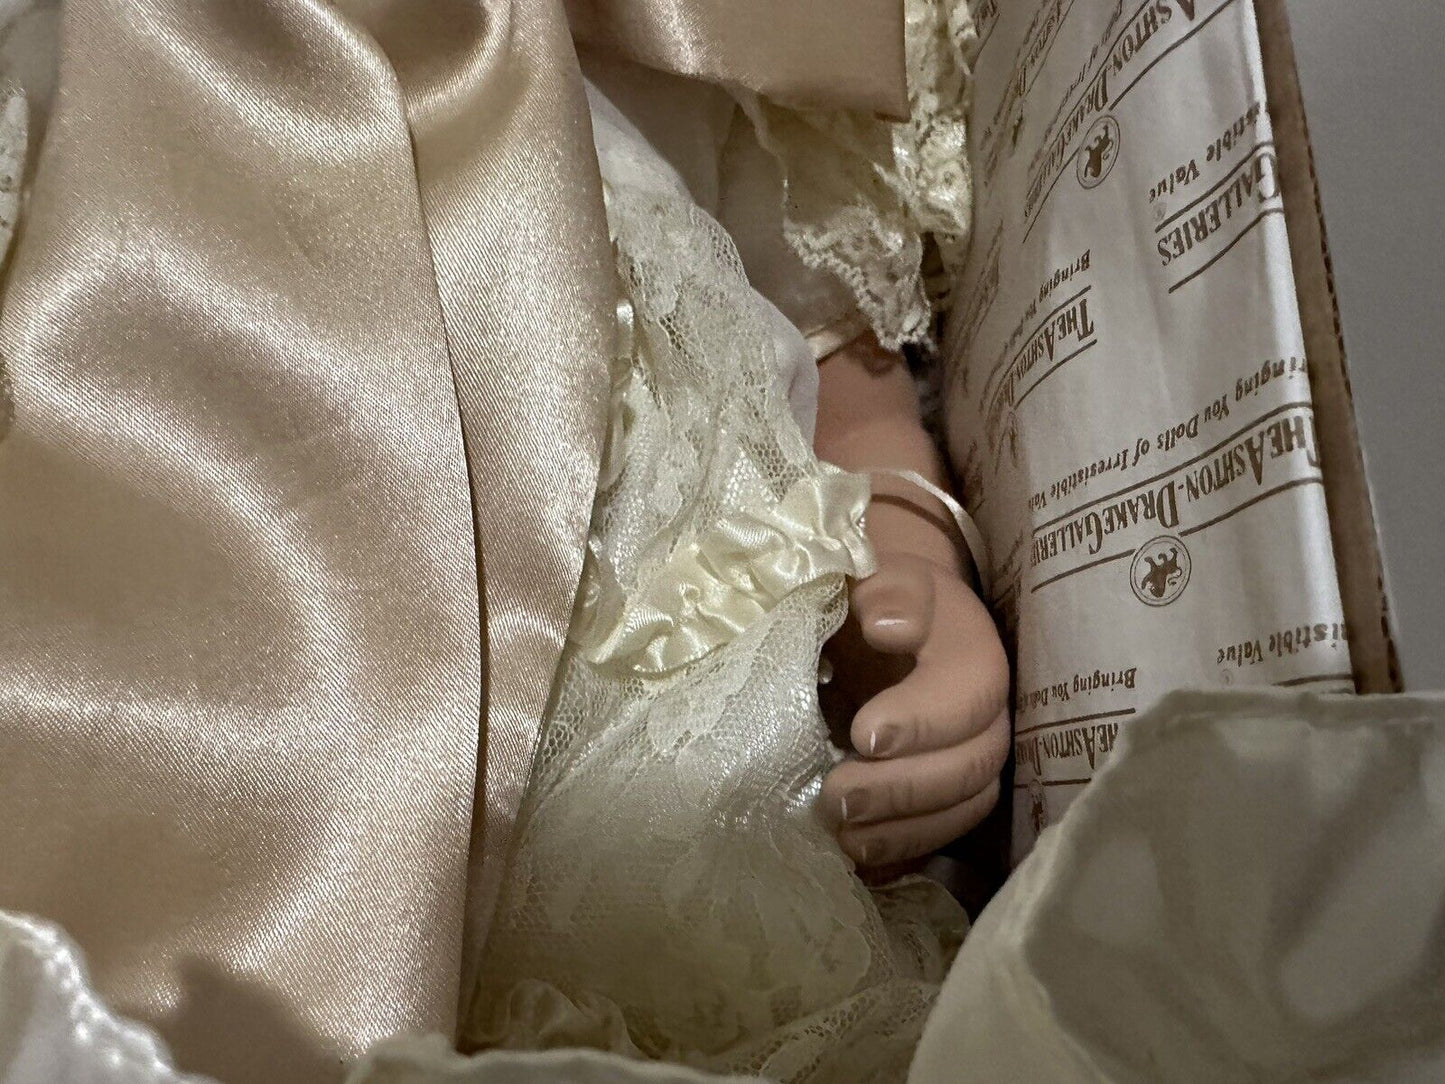 Ashton Drake's Prince George Doll - Royal Birth Series, Precious Porcelain Collectible - TreasuTiques